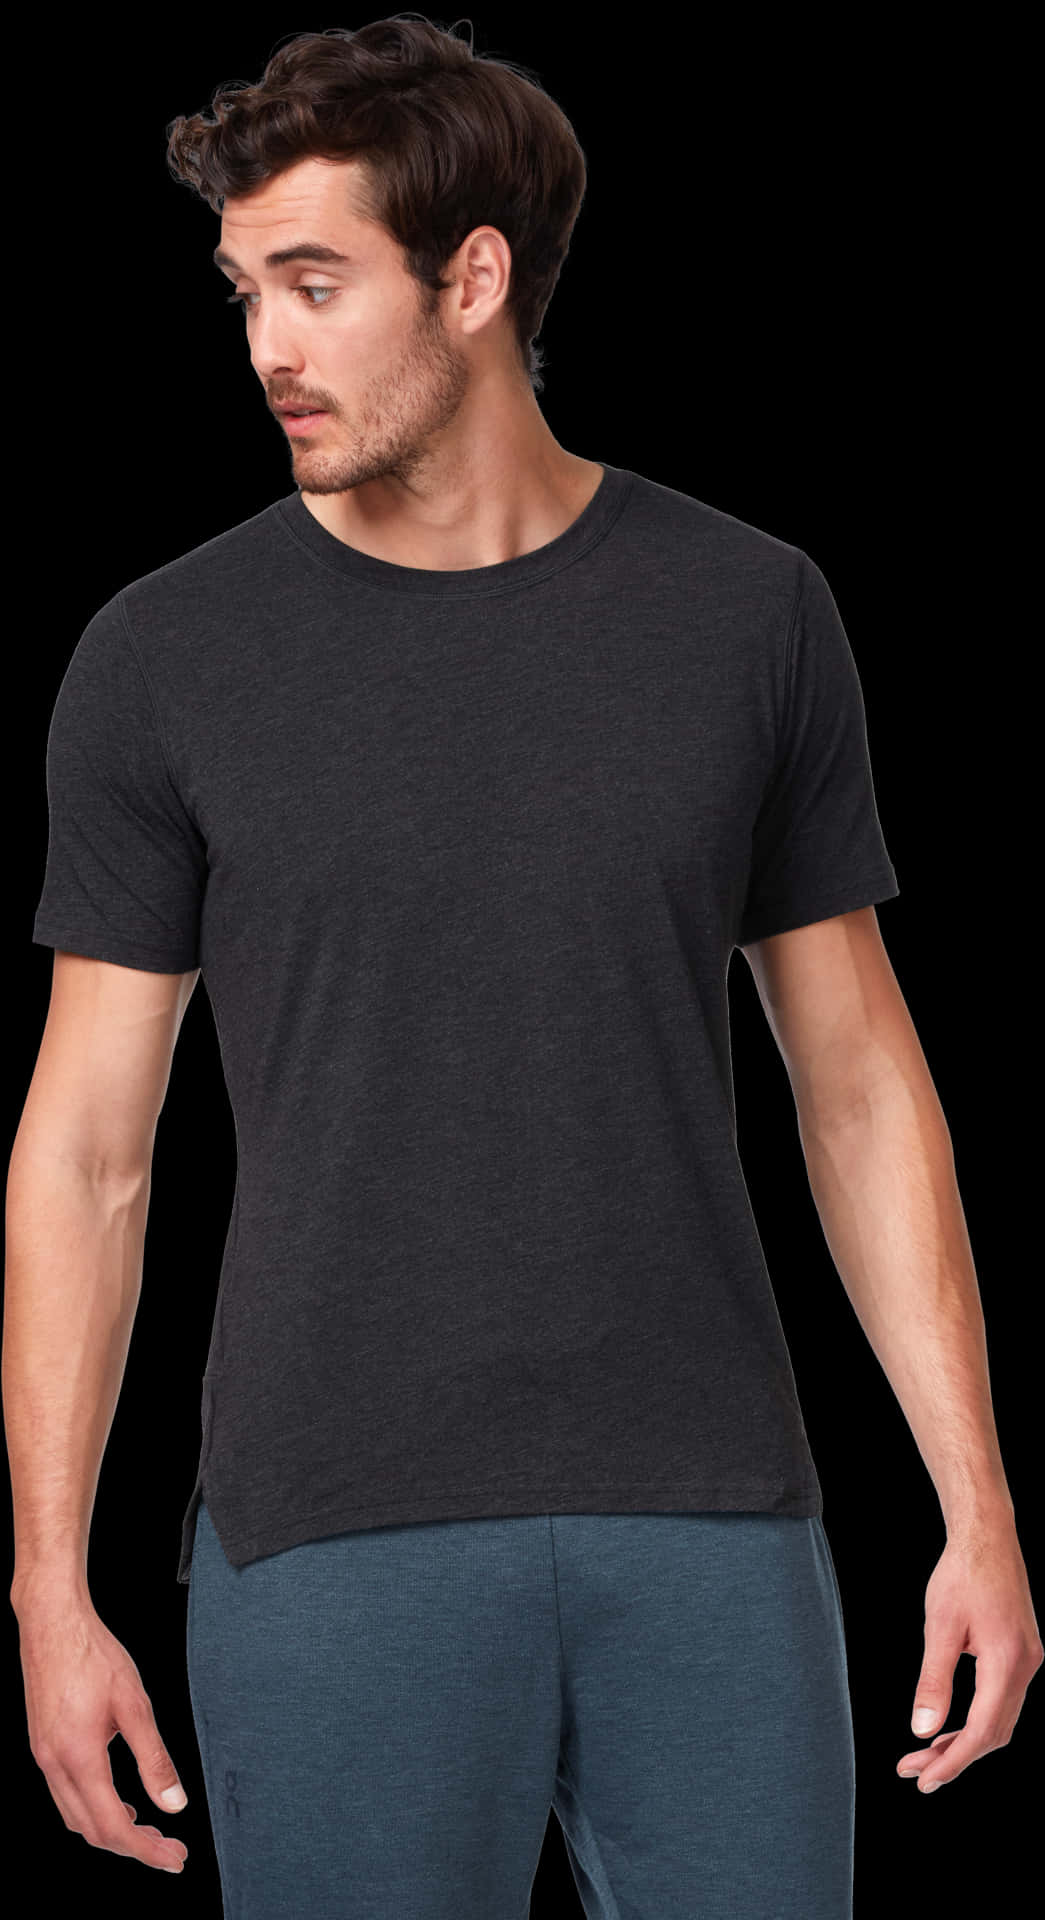 Manin Black T Shirt Looking Aside PNG image